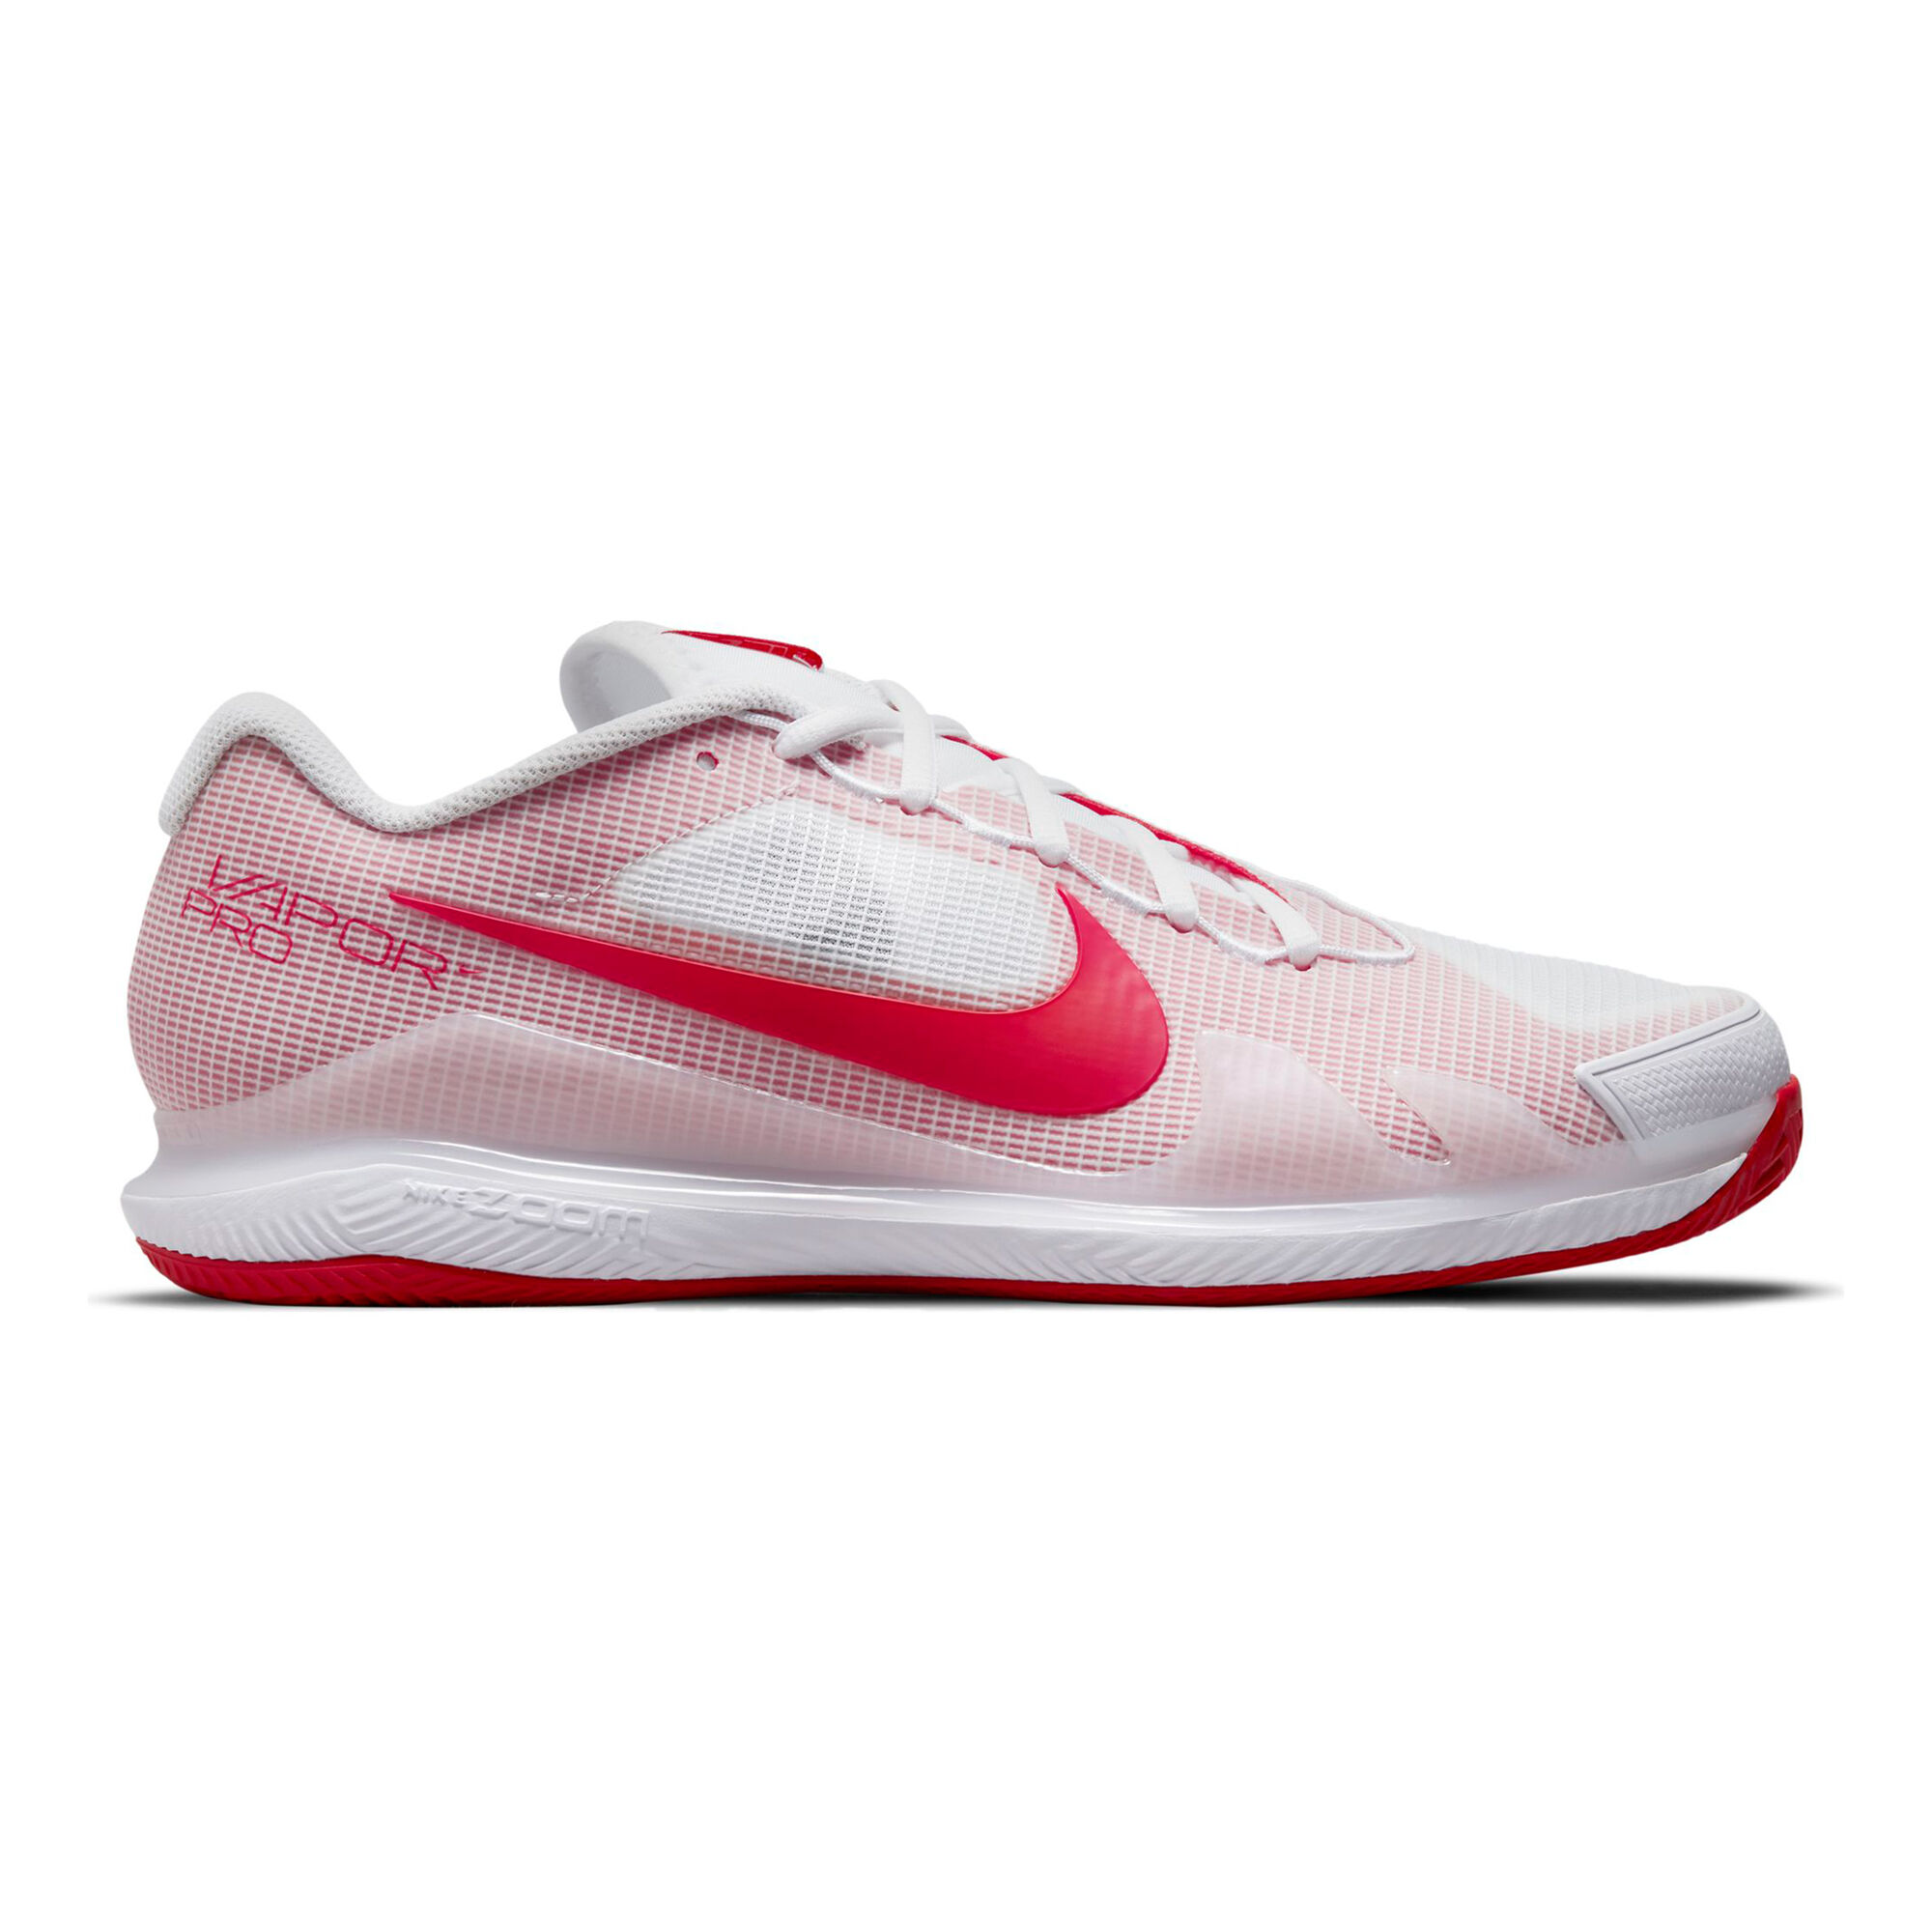 Buy Nike Air Zoom Vapor Pro Clay Court Shoe Men White Red online